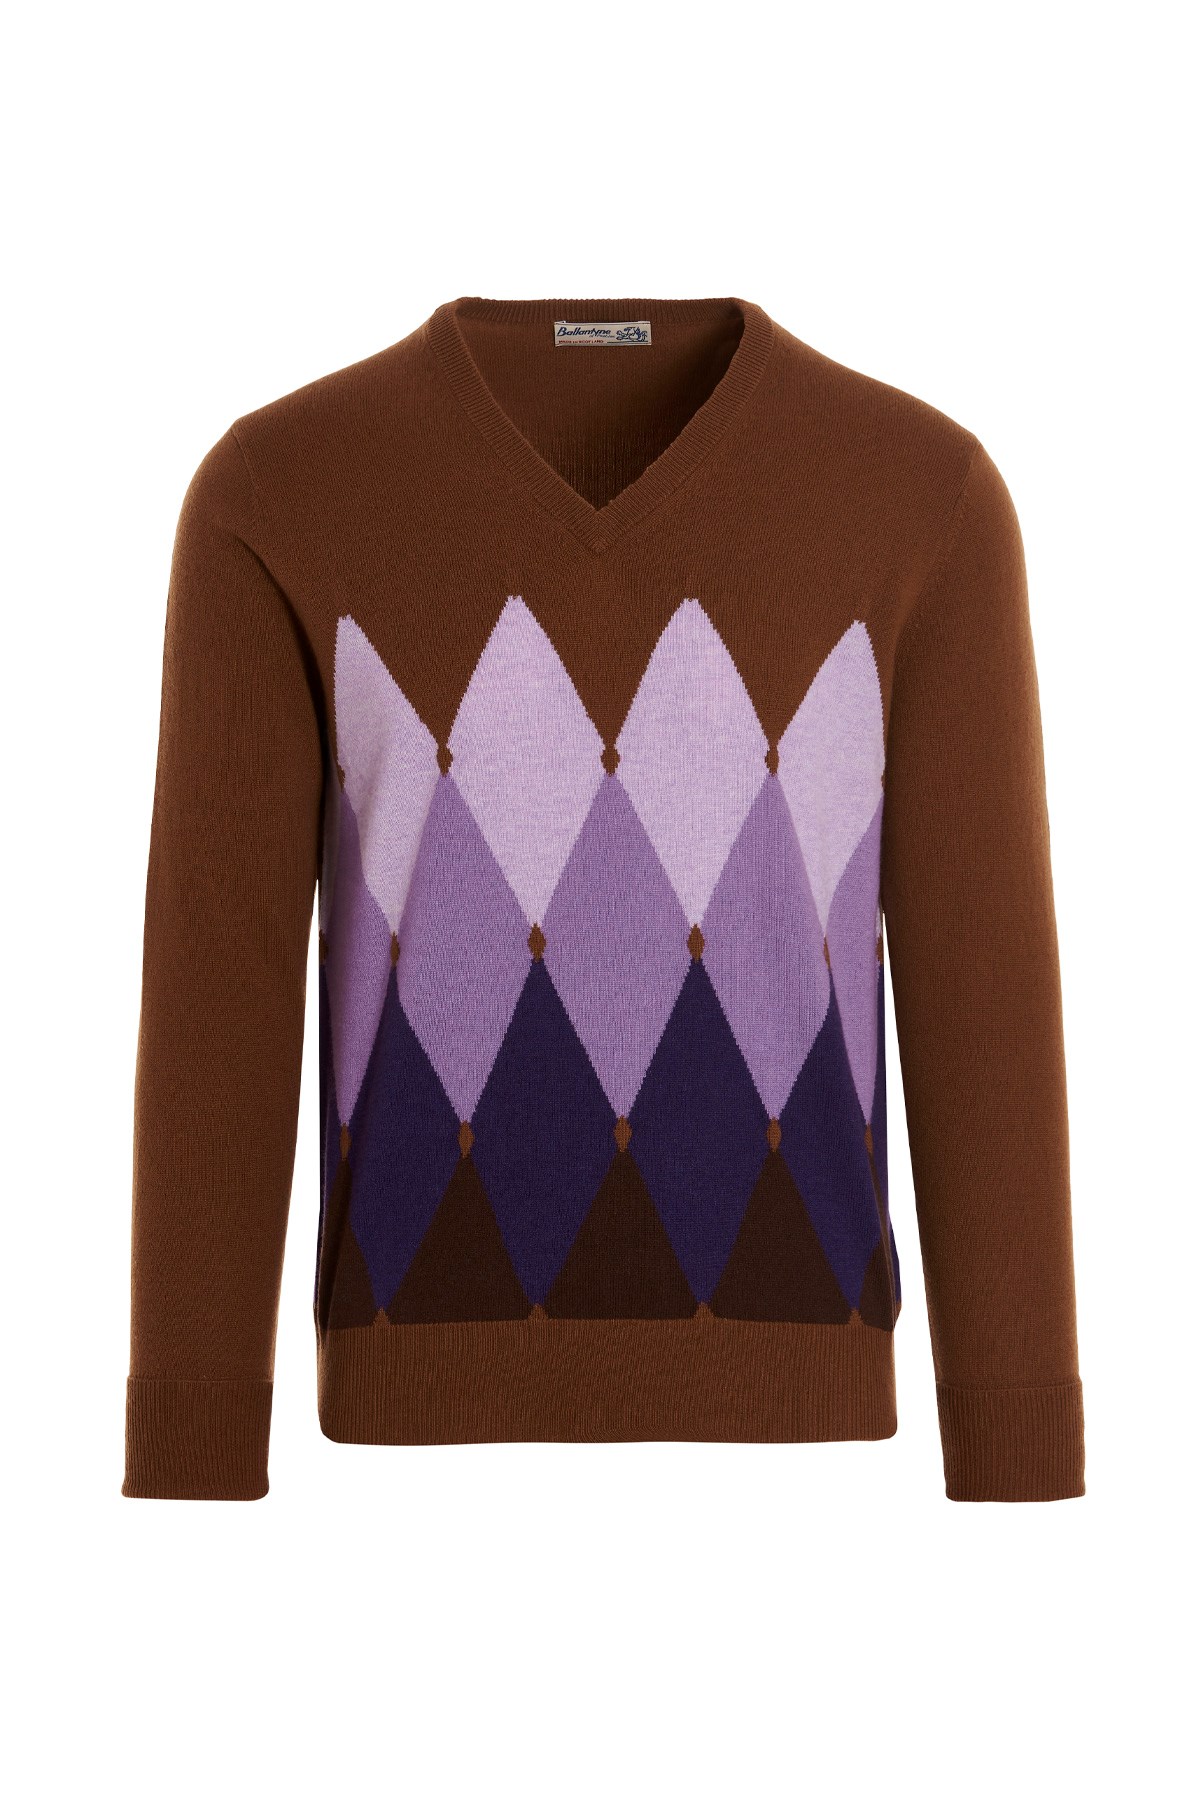 BALLANTYNE Diamond-Shaped Intarsia Sweater